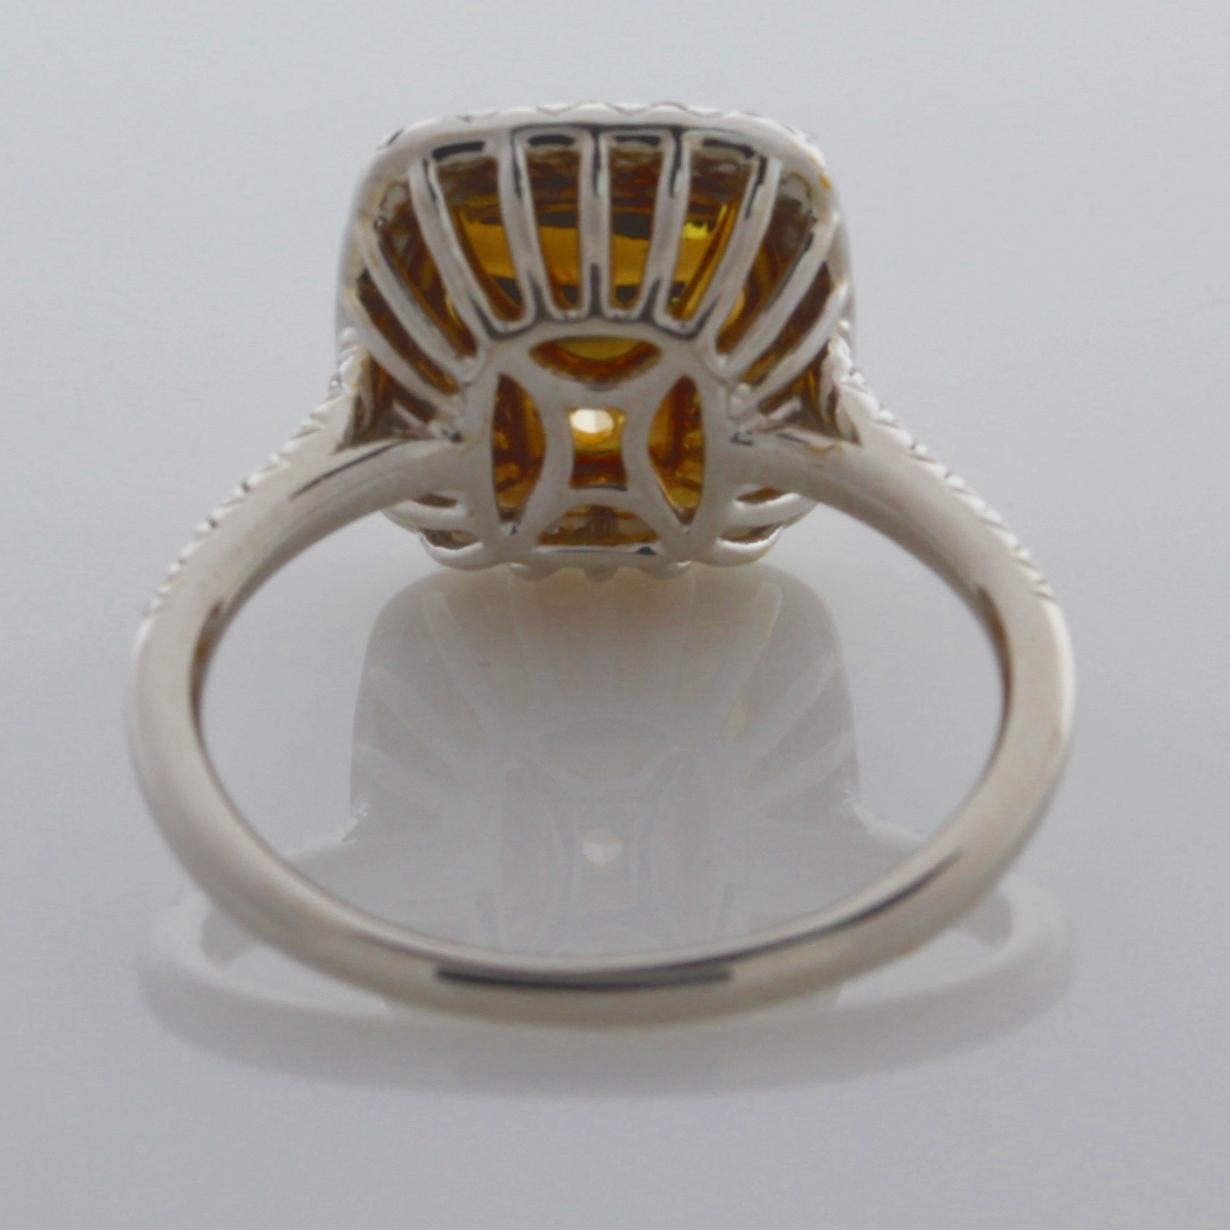  3.01 Carat Cushion Cut Natural Fancy Yellow Diamond Ring 18 Karat Gold For Sale 1